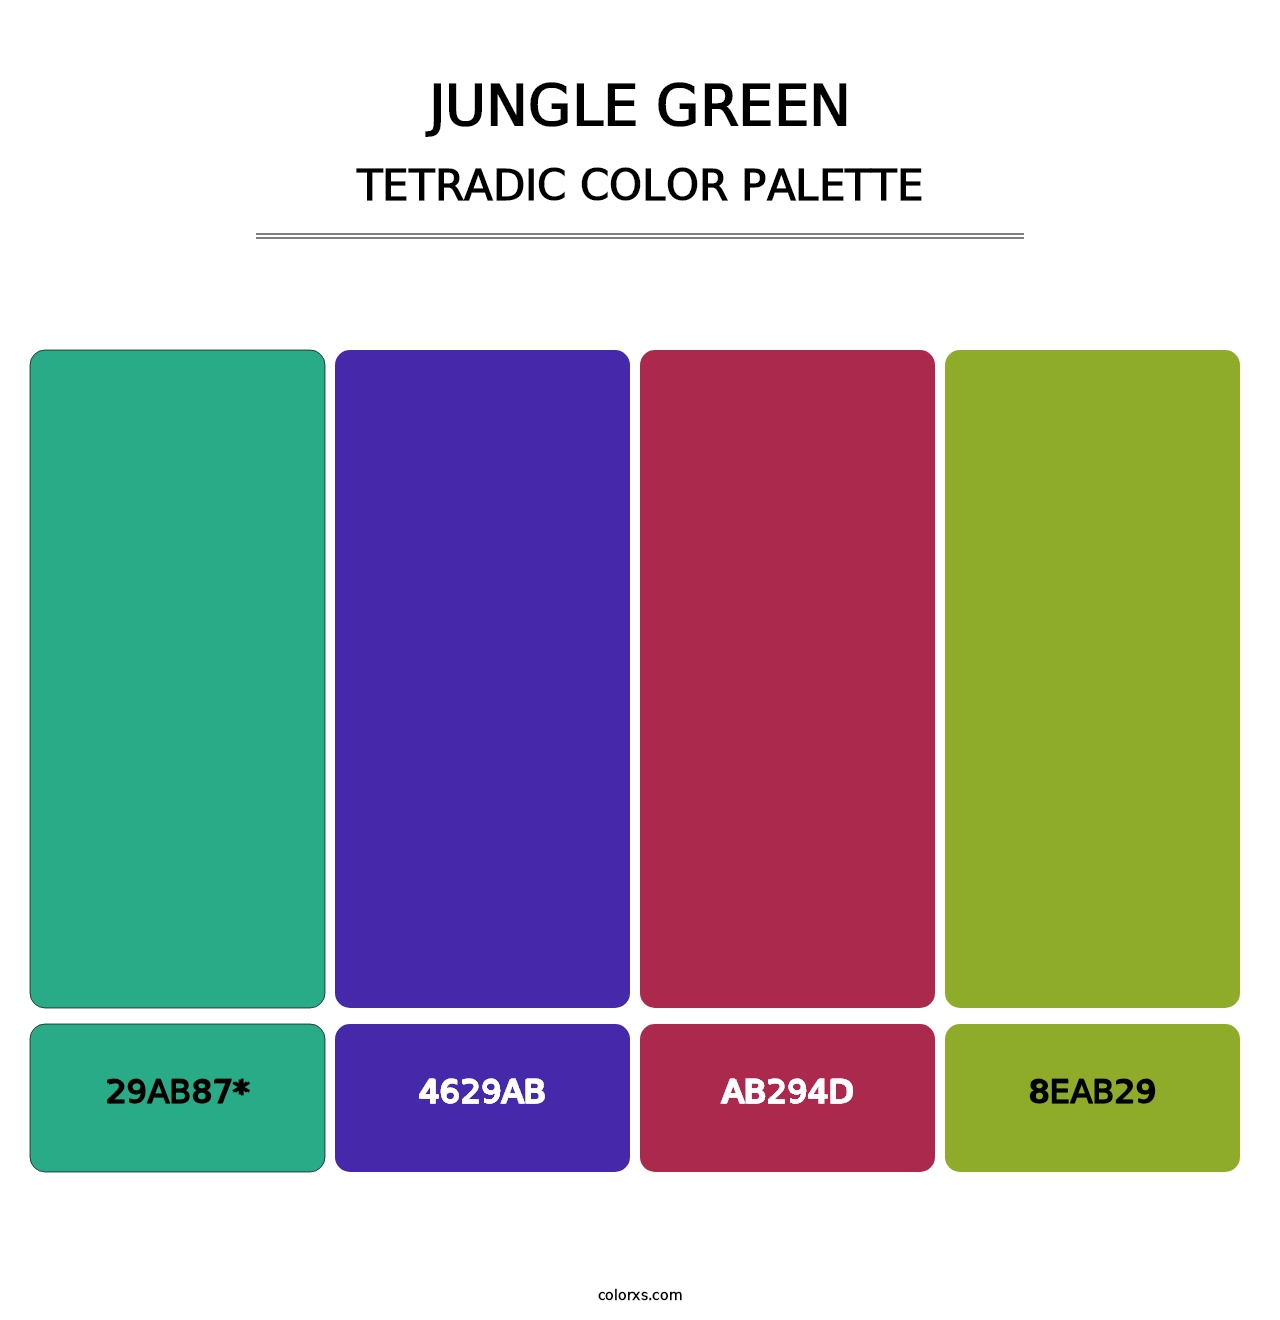 Jungle Green - Tetradic Color Palette